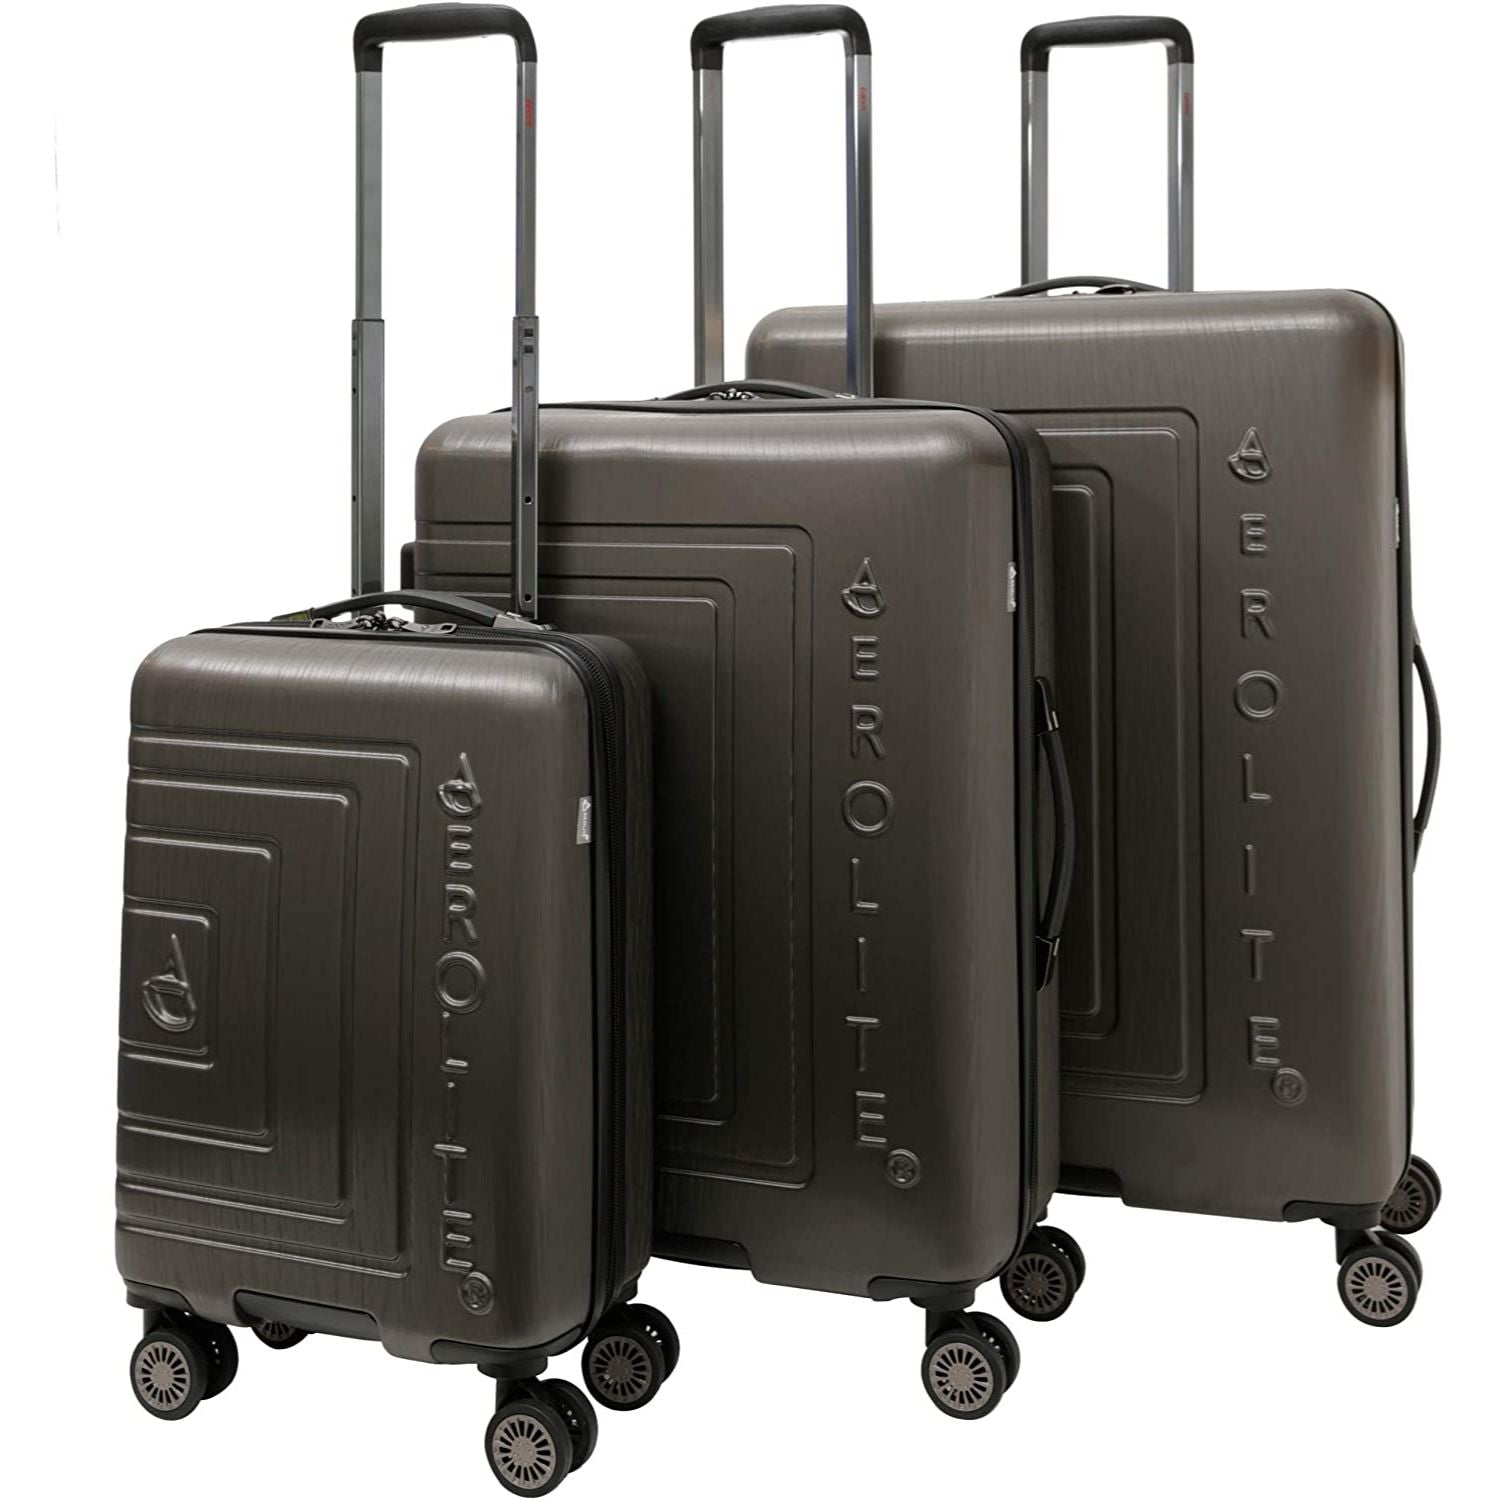 Aerolite Lightweight ABS Hard Shell 8 Wheel Complete Luggage Set (Cabi